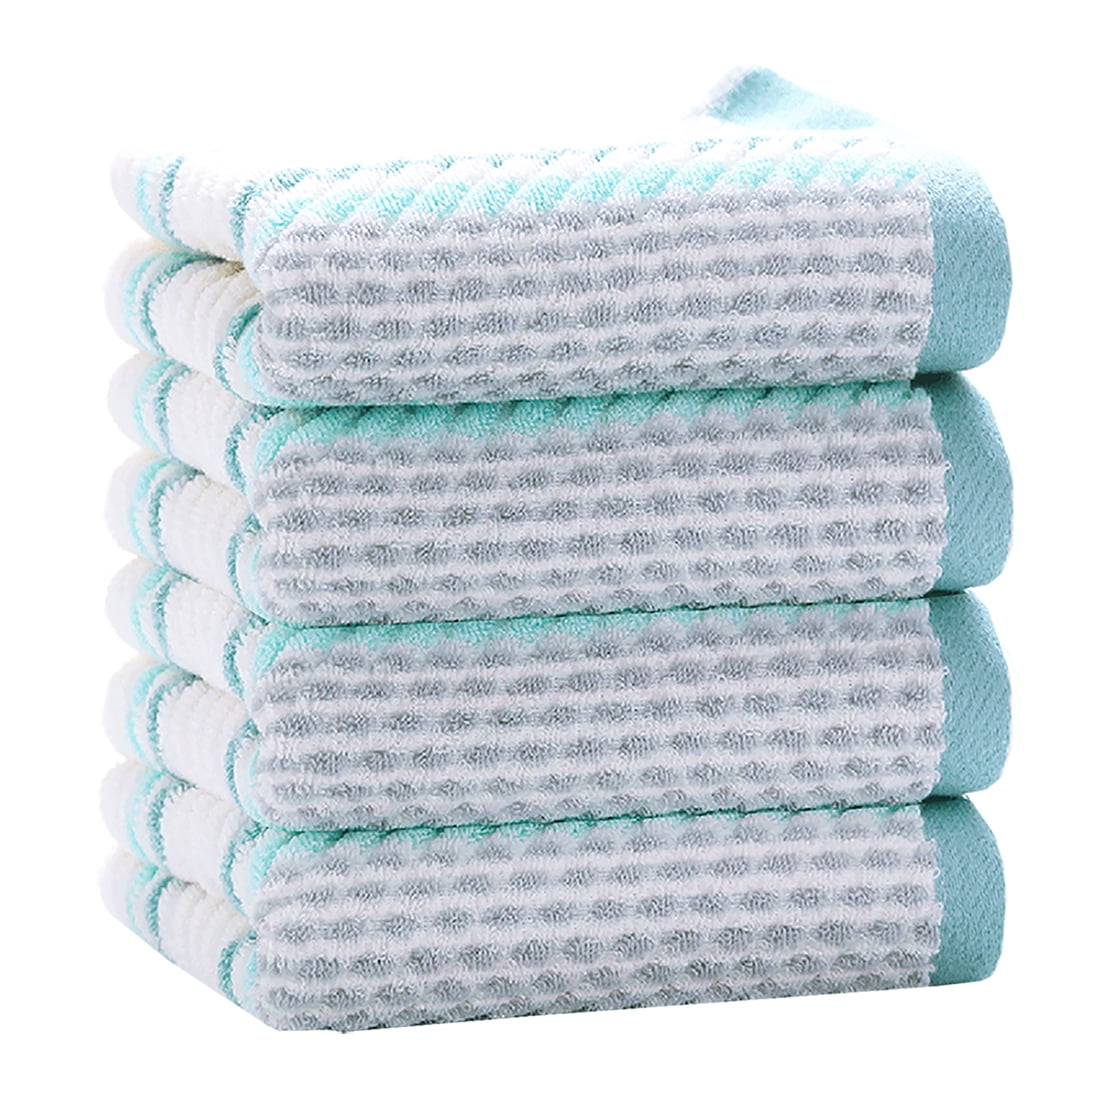 Set of 2 Striped Cotton Tea Towels - 29.5